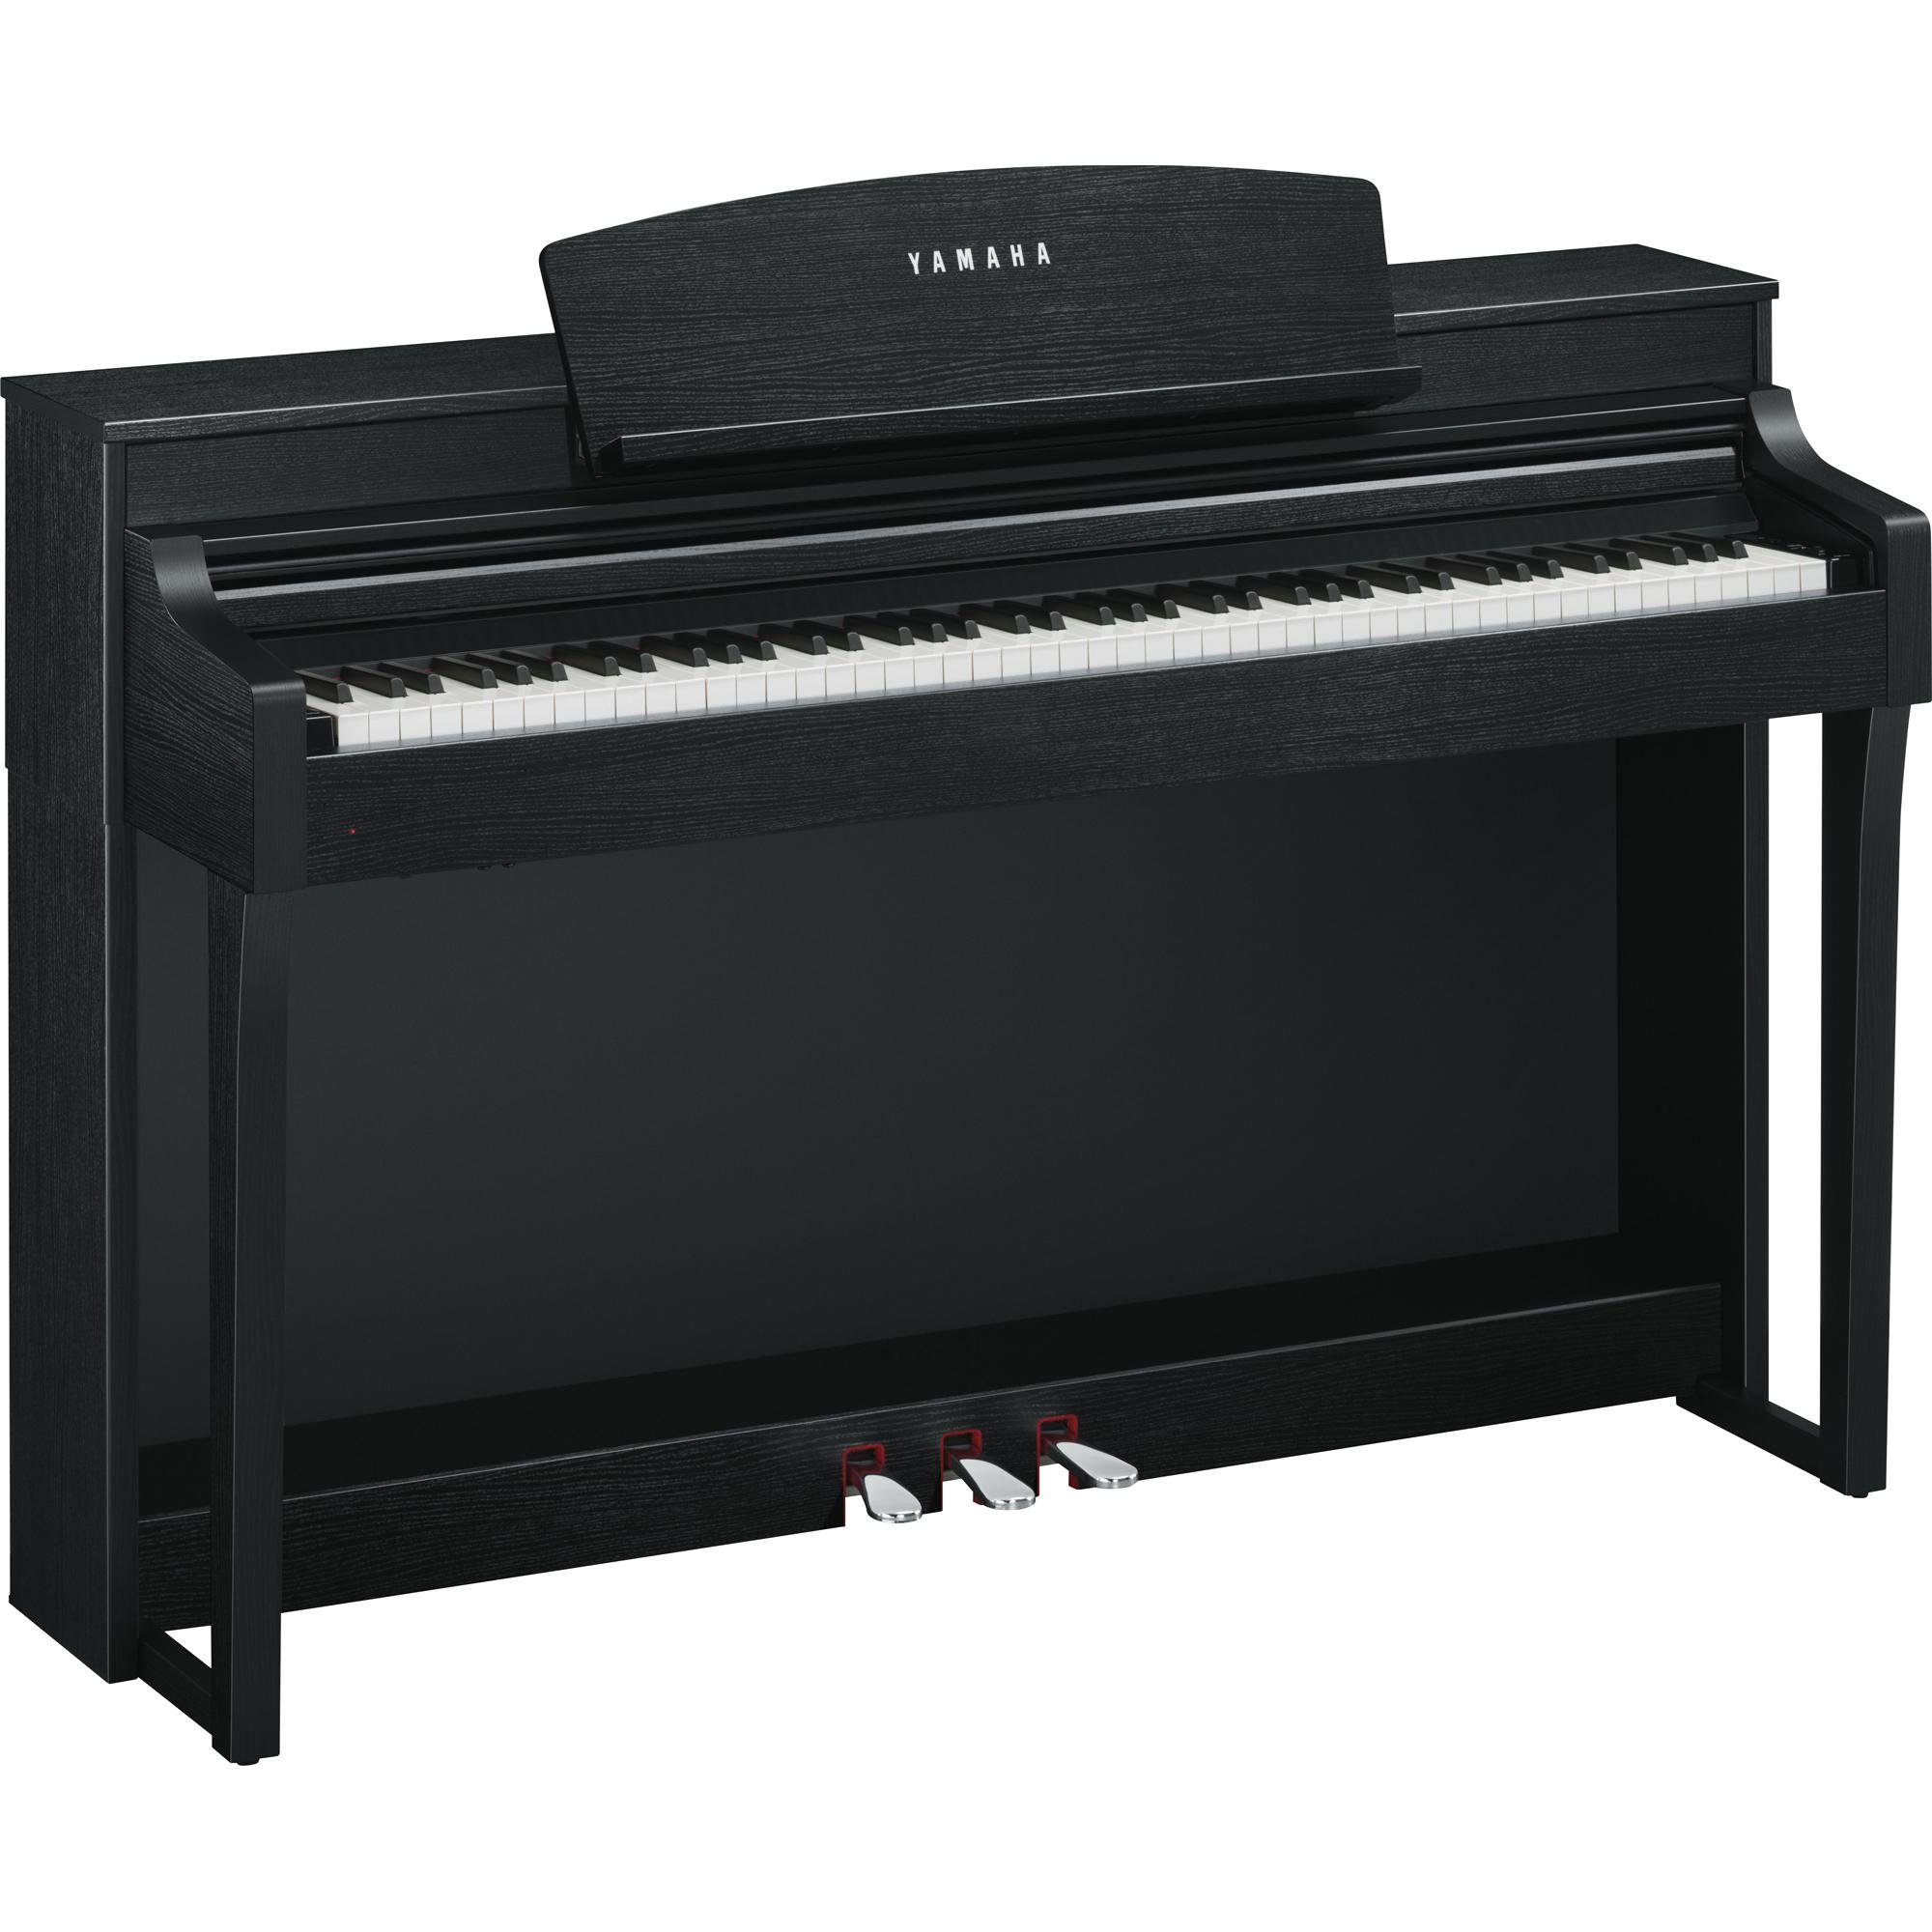 Piano Yamaha Clavinova CSP-150 Digital Preto